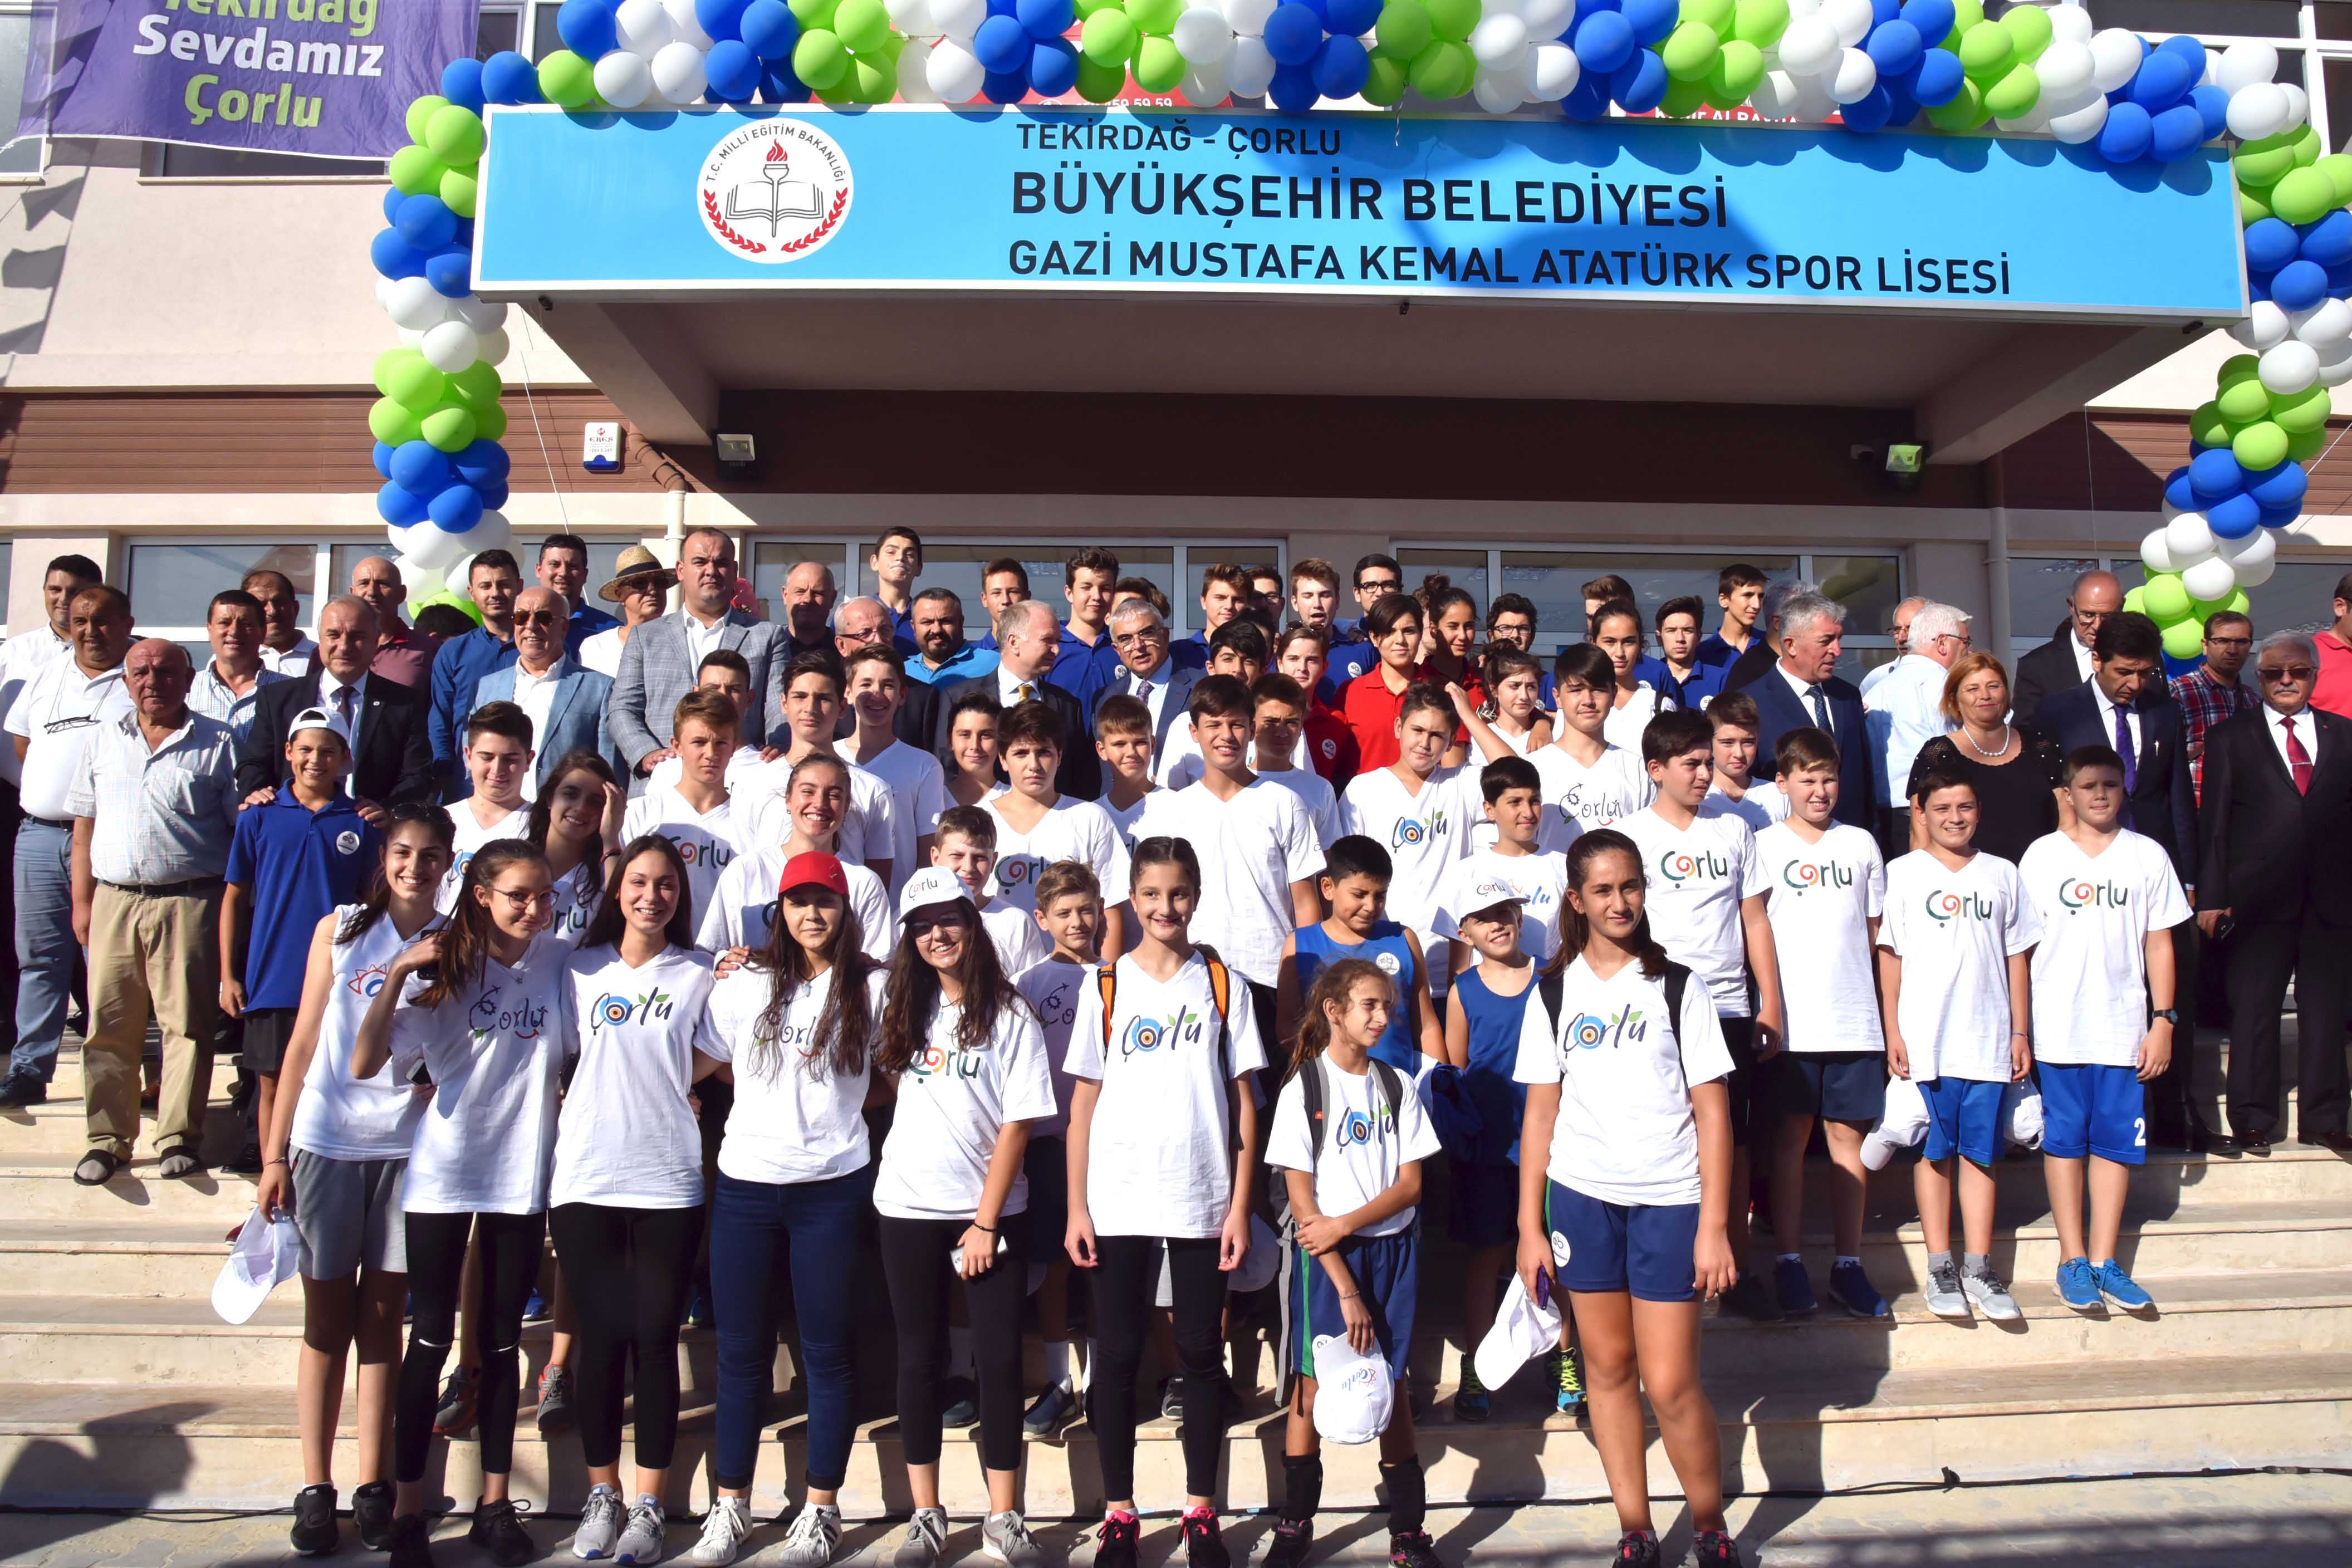 Gazi Mustafa Kemal Atatrk Spor Lisesi